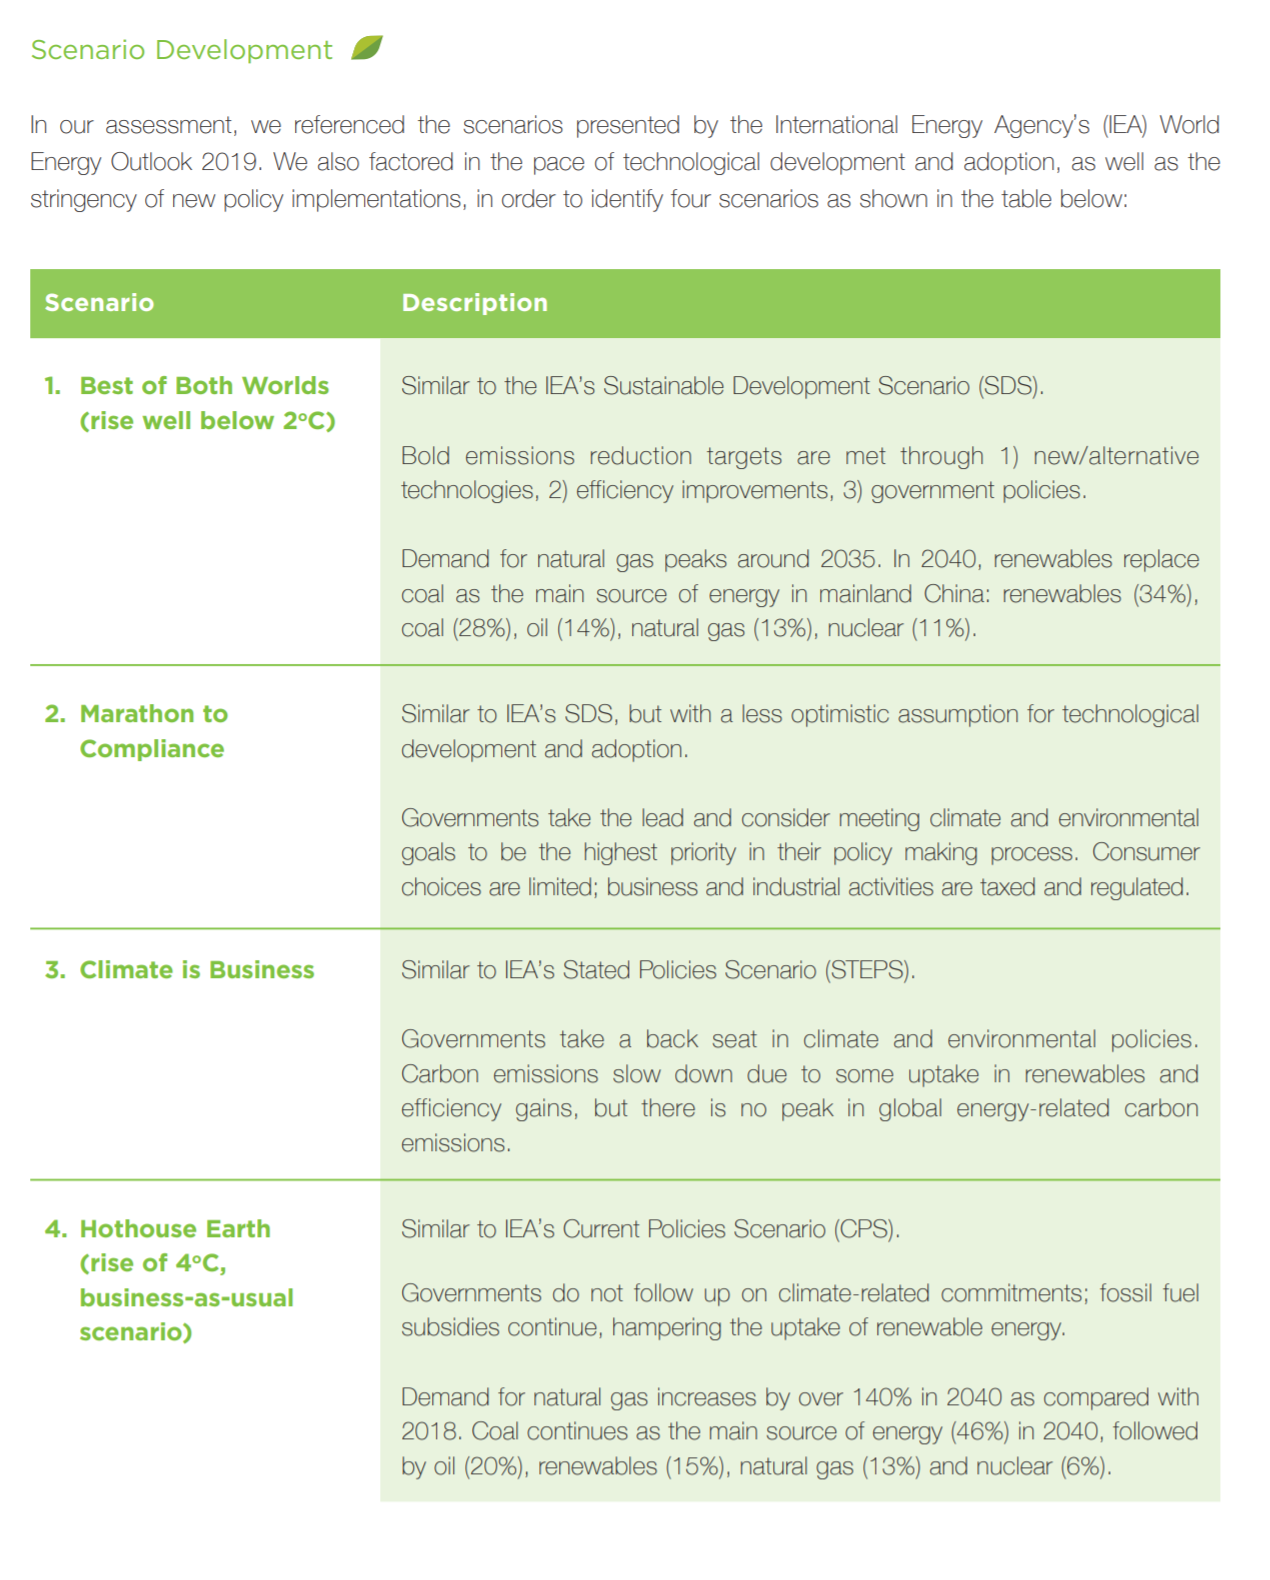 The Hong Kong and China Gas Company Limited 2020 ESG report